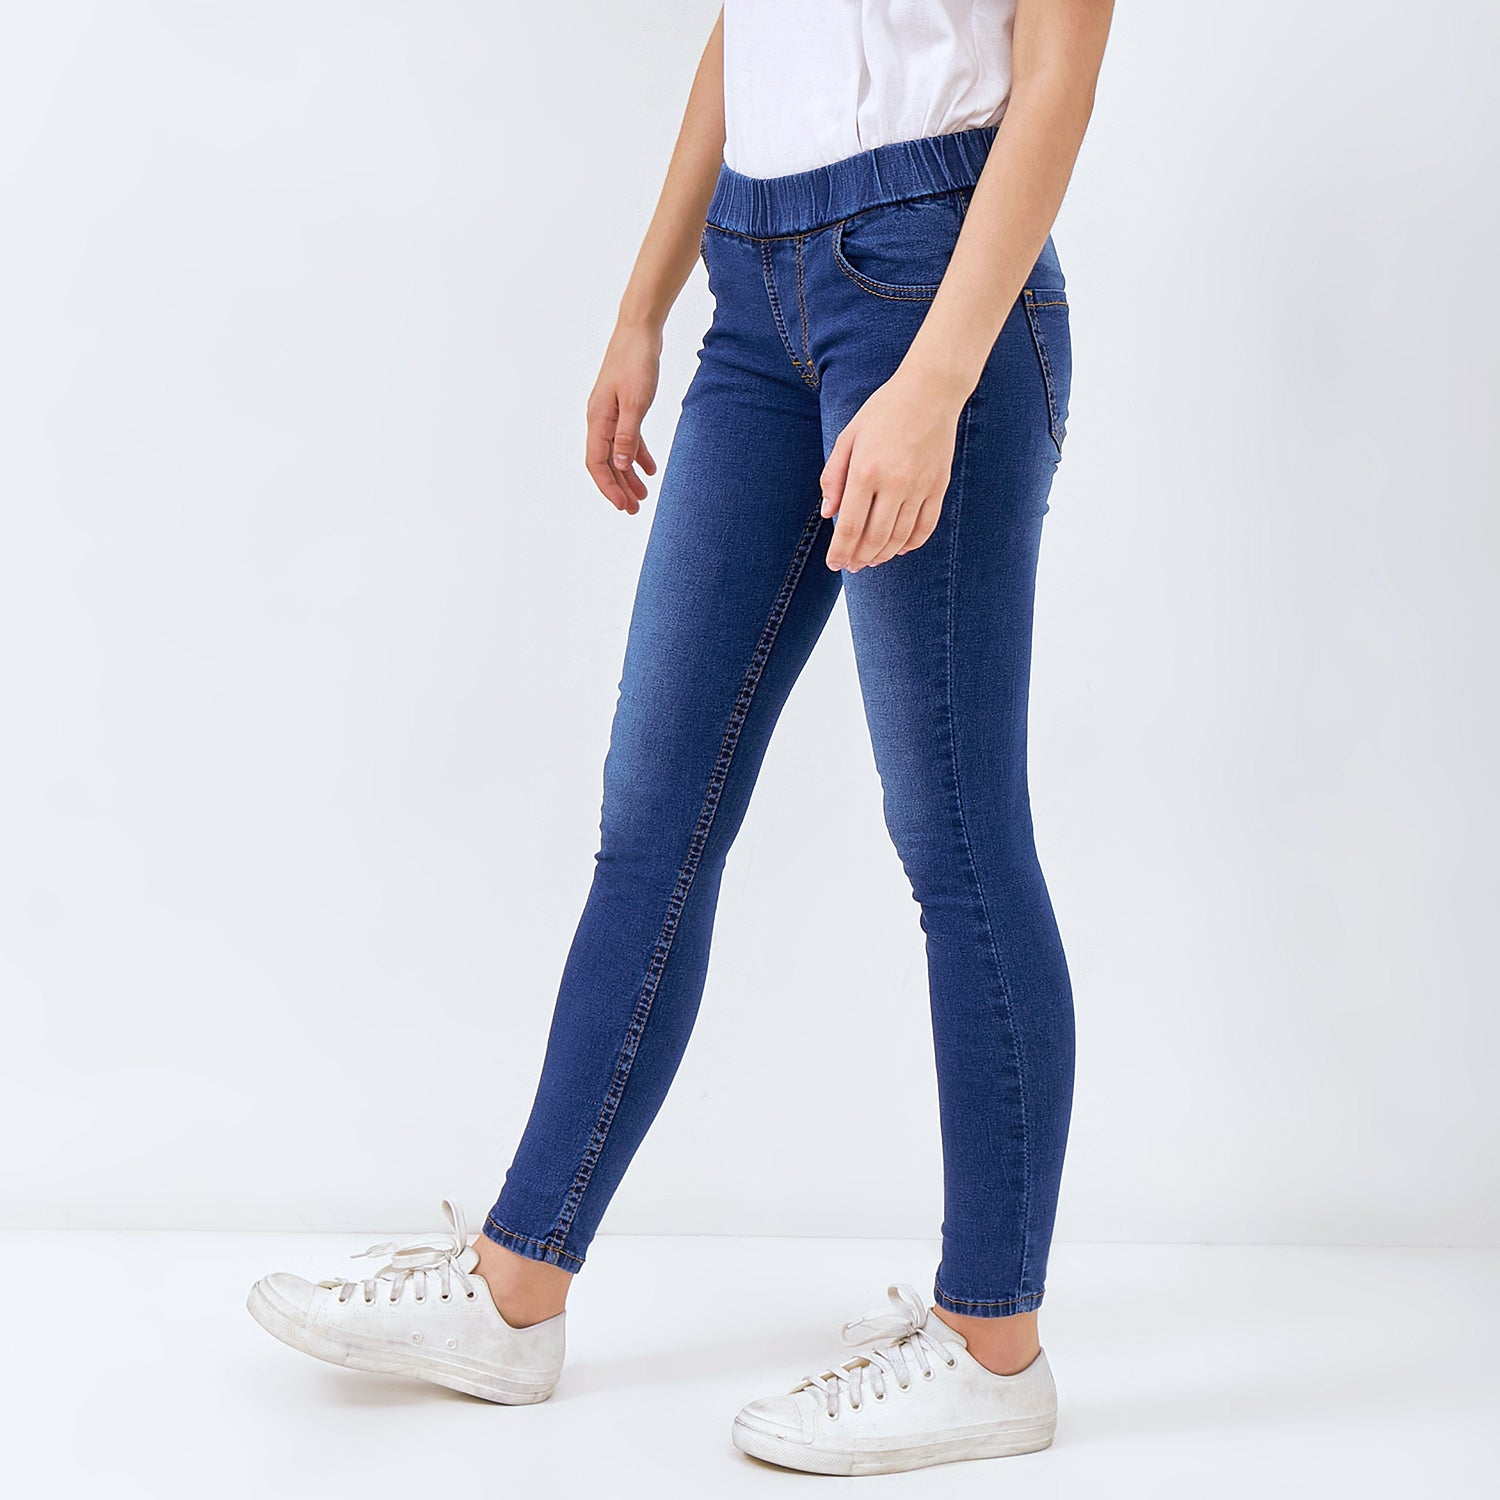 Epic Pants - Celana Jeans Wanita Stretch Blue denim dan Black [MYJLG 01]